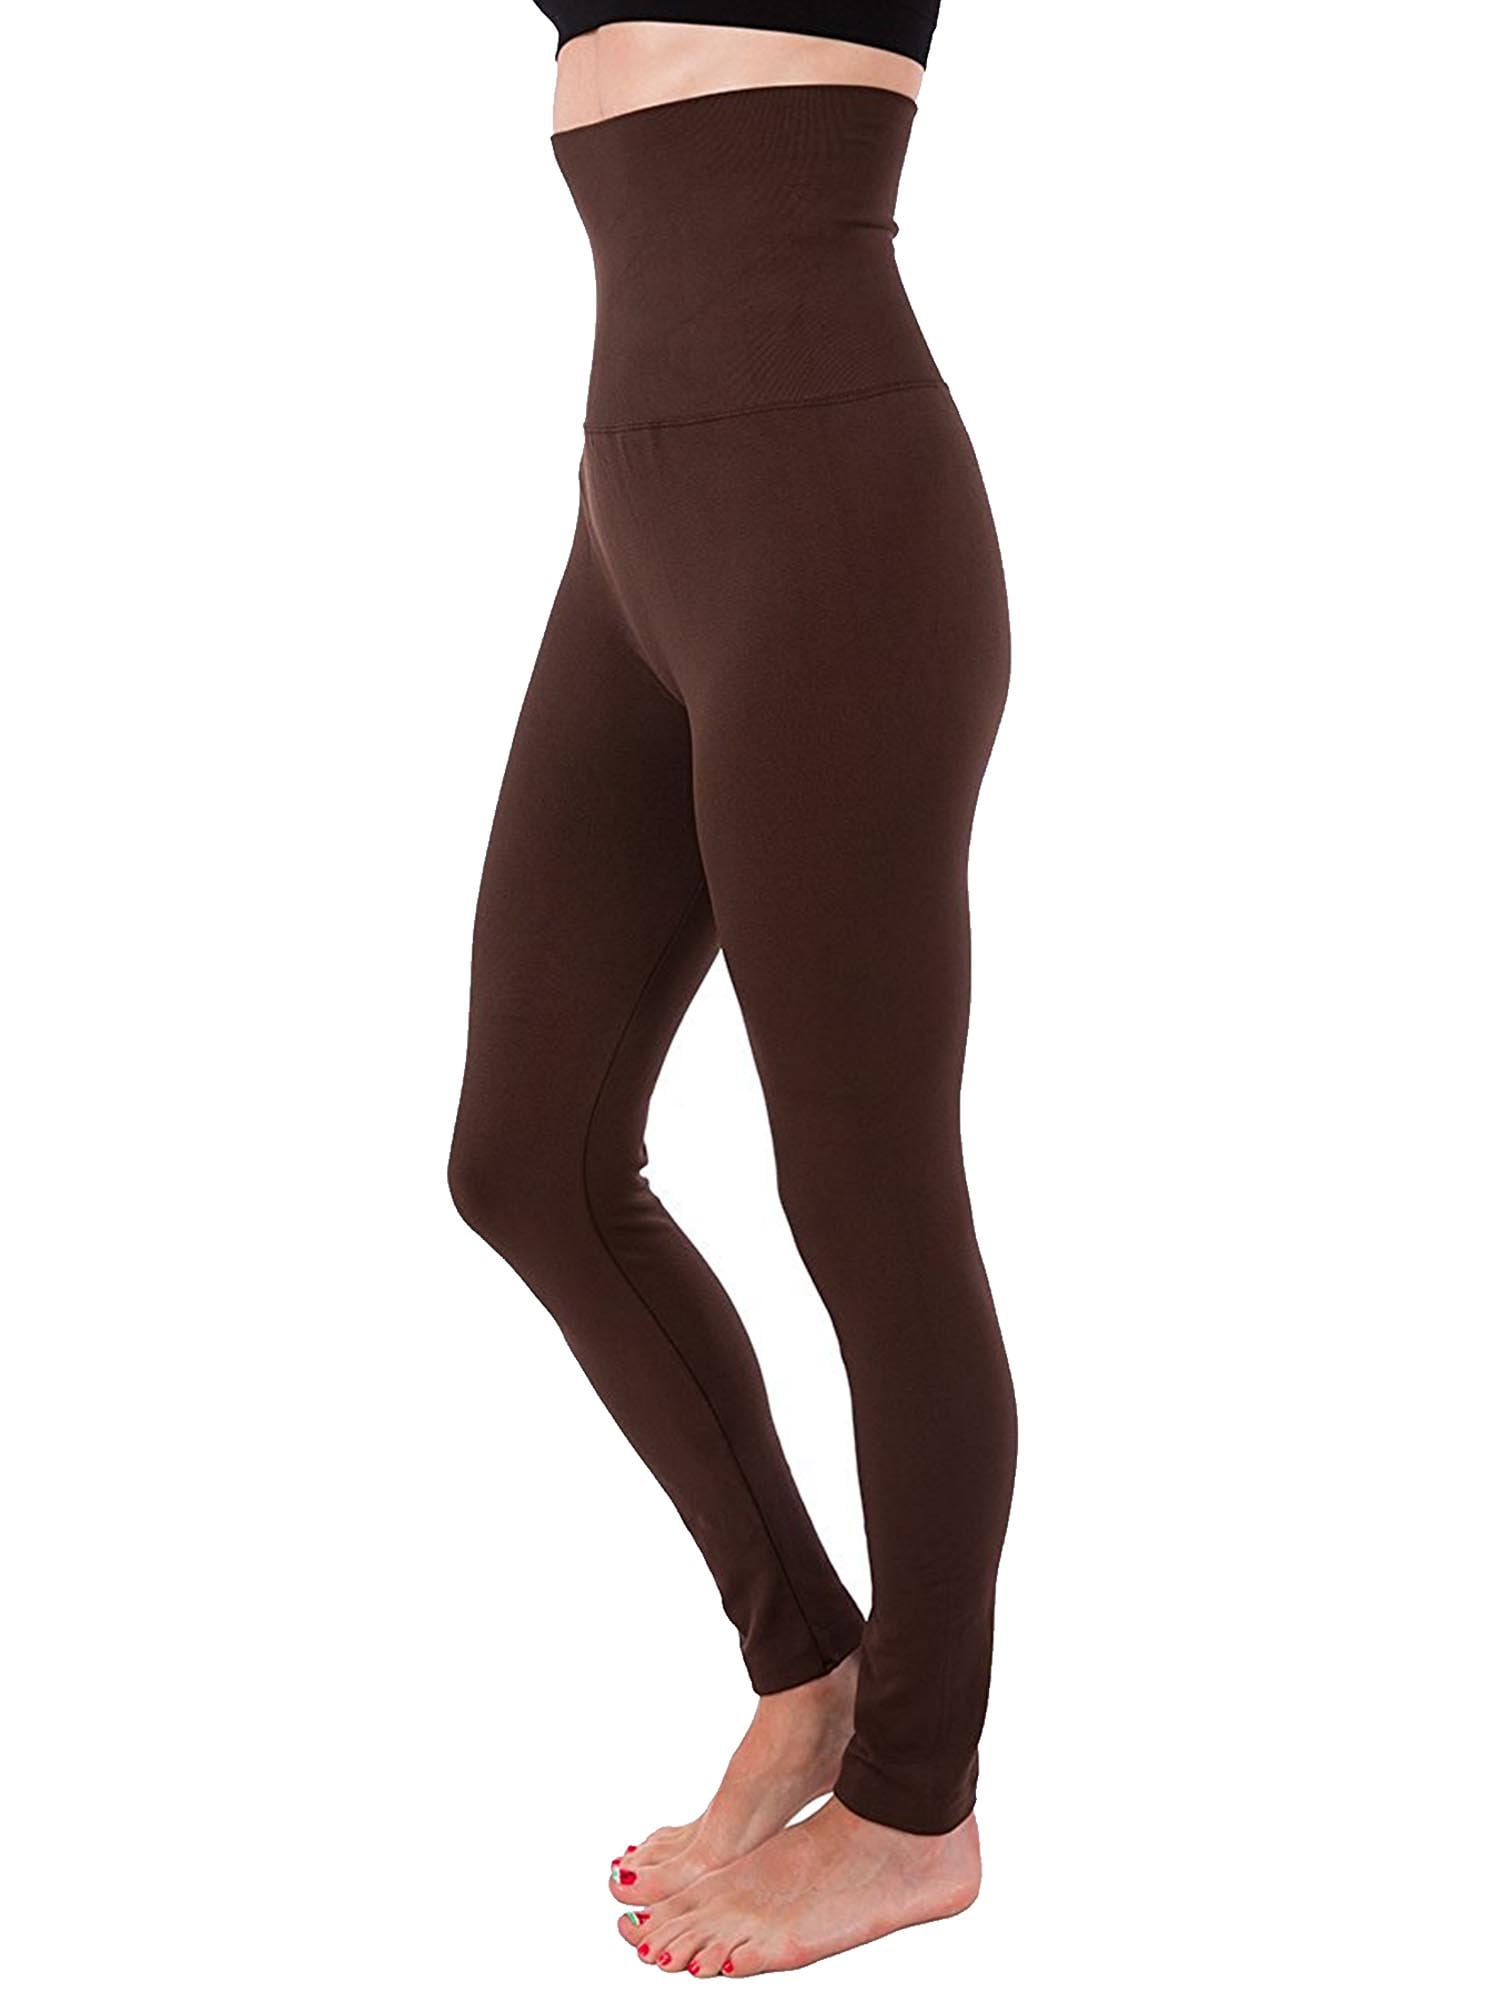  Premium Fleece Lined Leggings Women High Waisted Winter Warm  Leggings - 14+ Colors